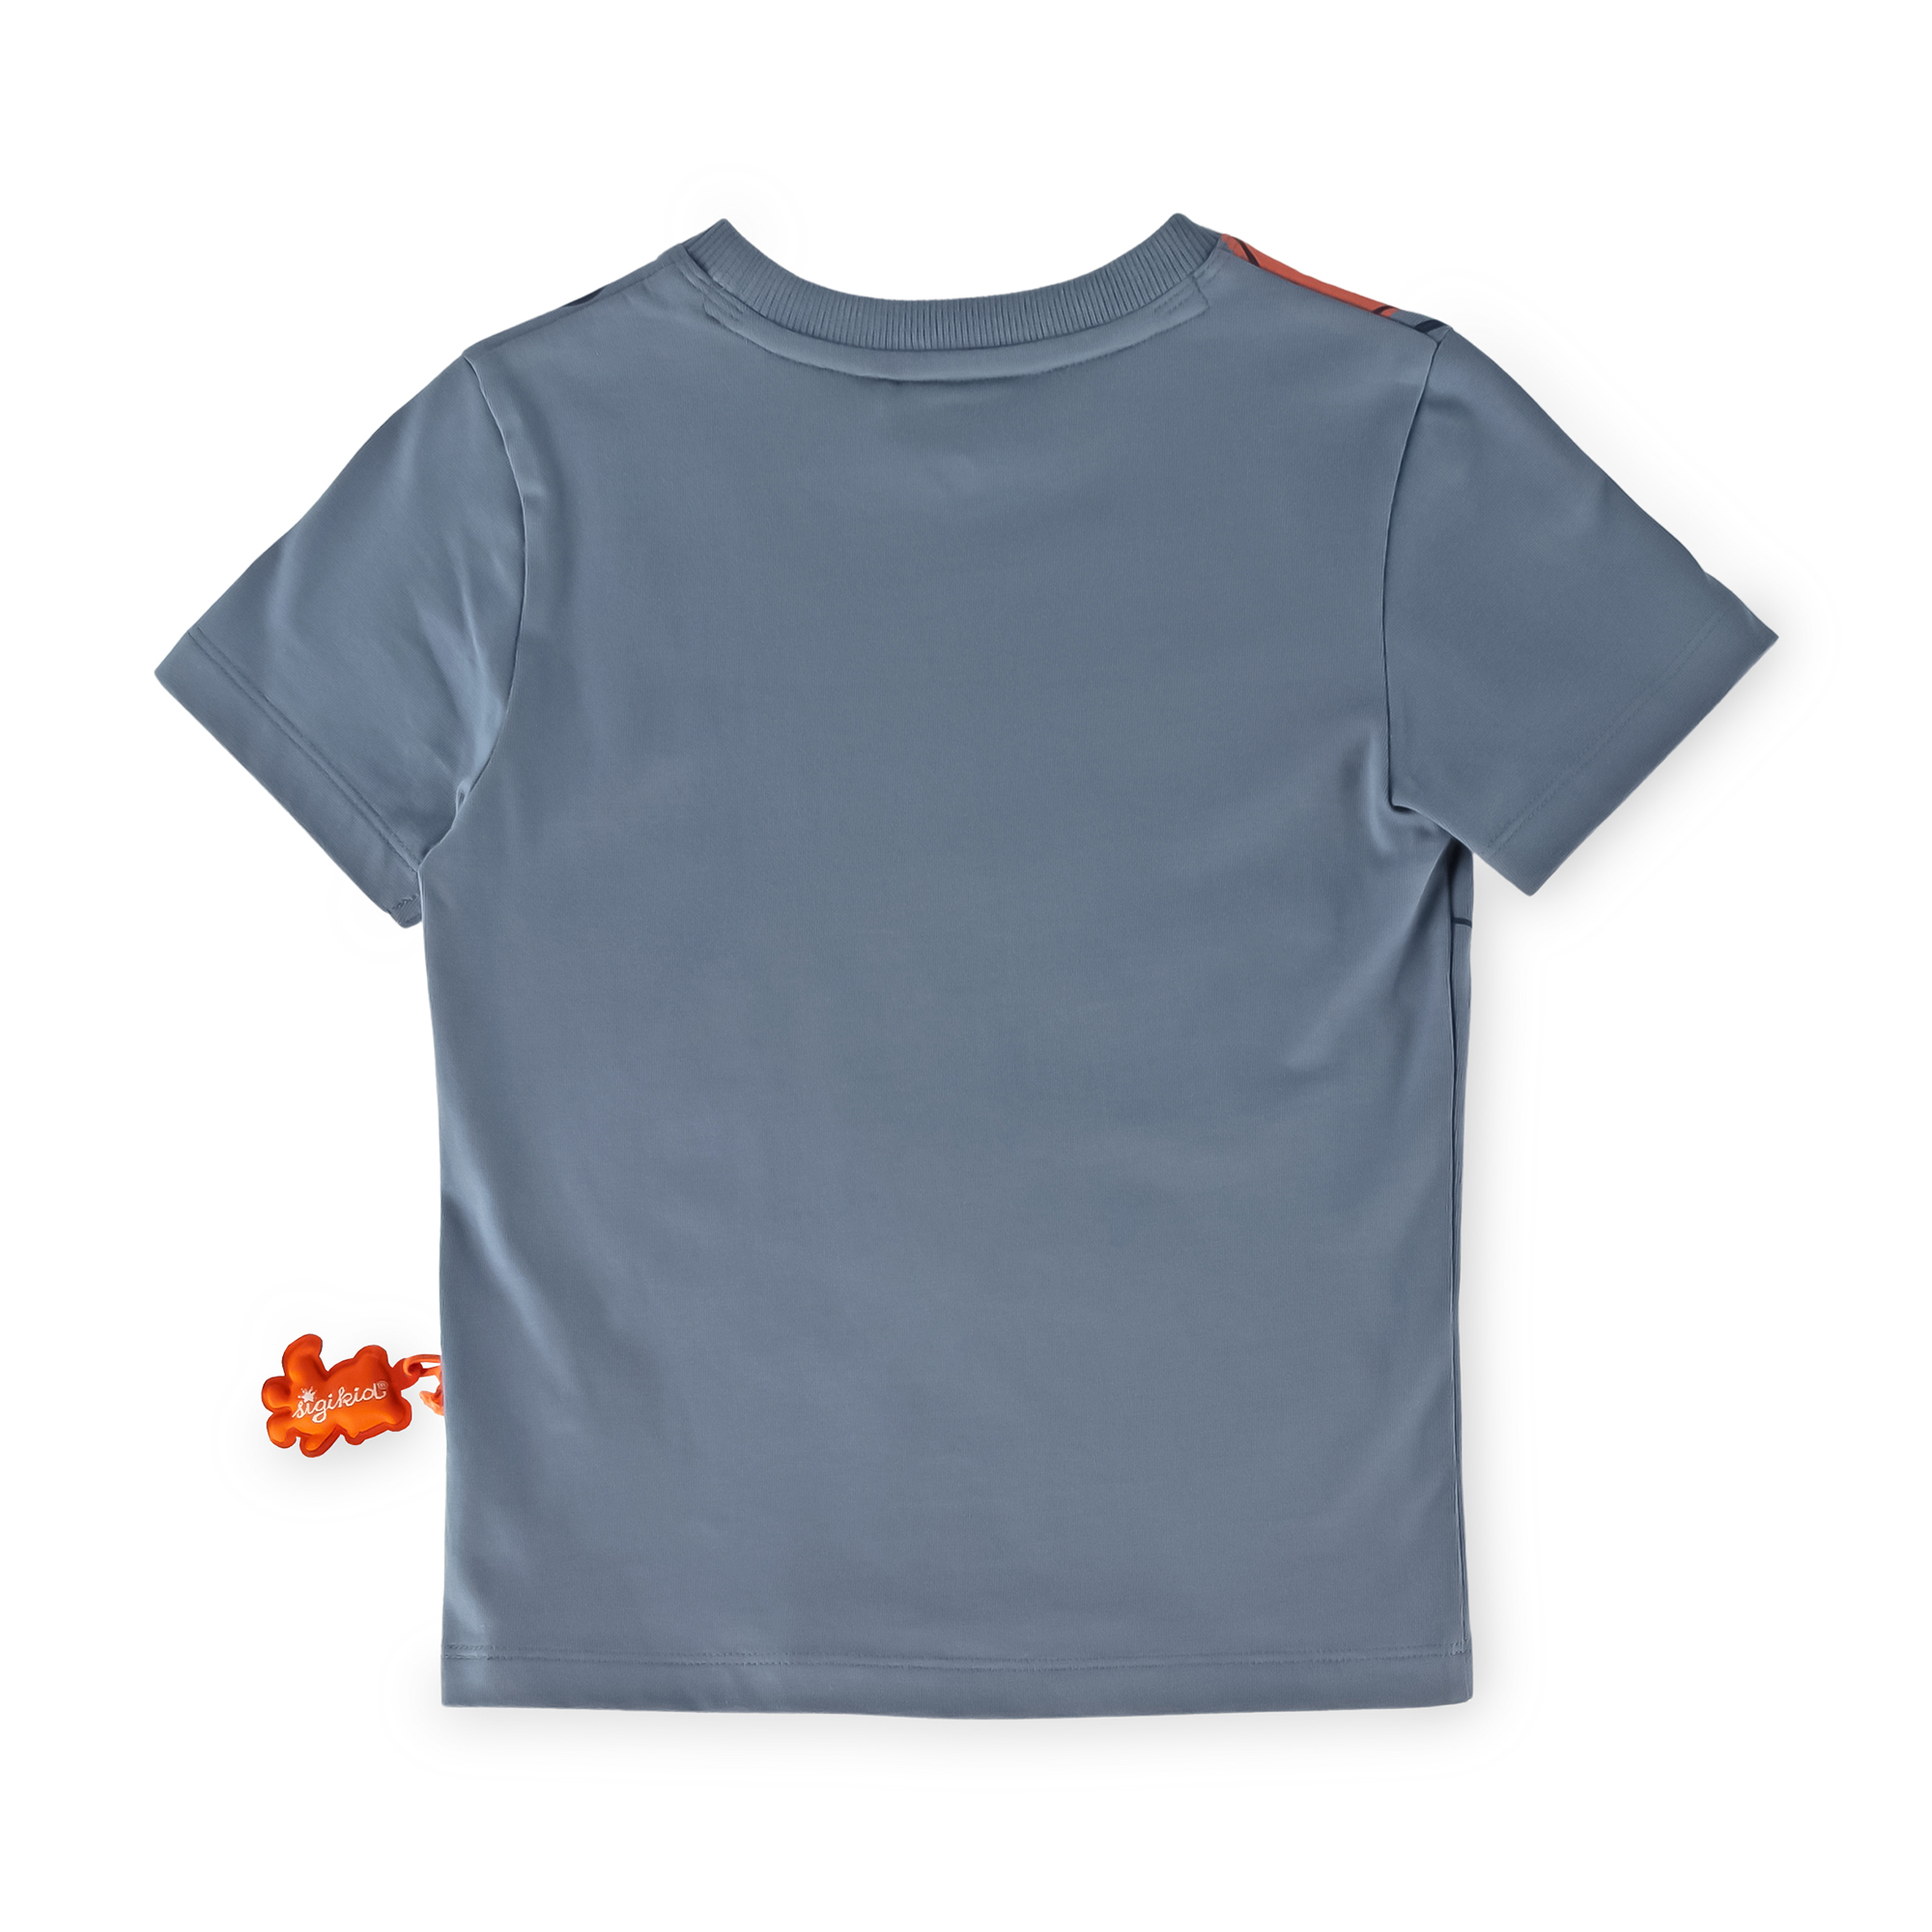 Smokey blue children's T-shirt jeep front